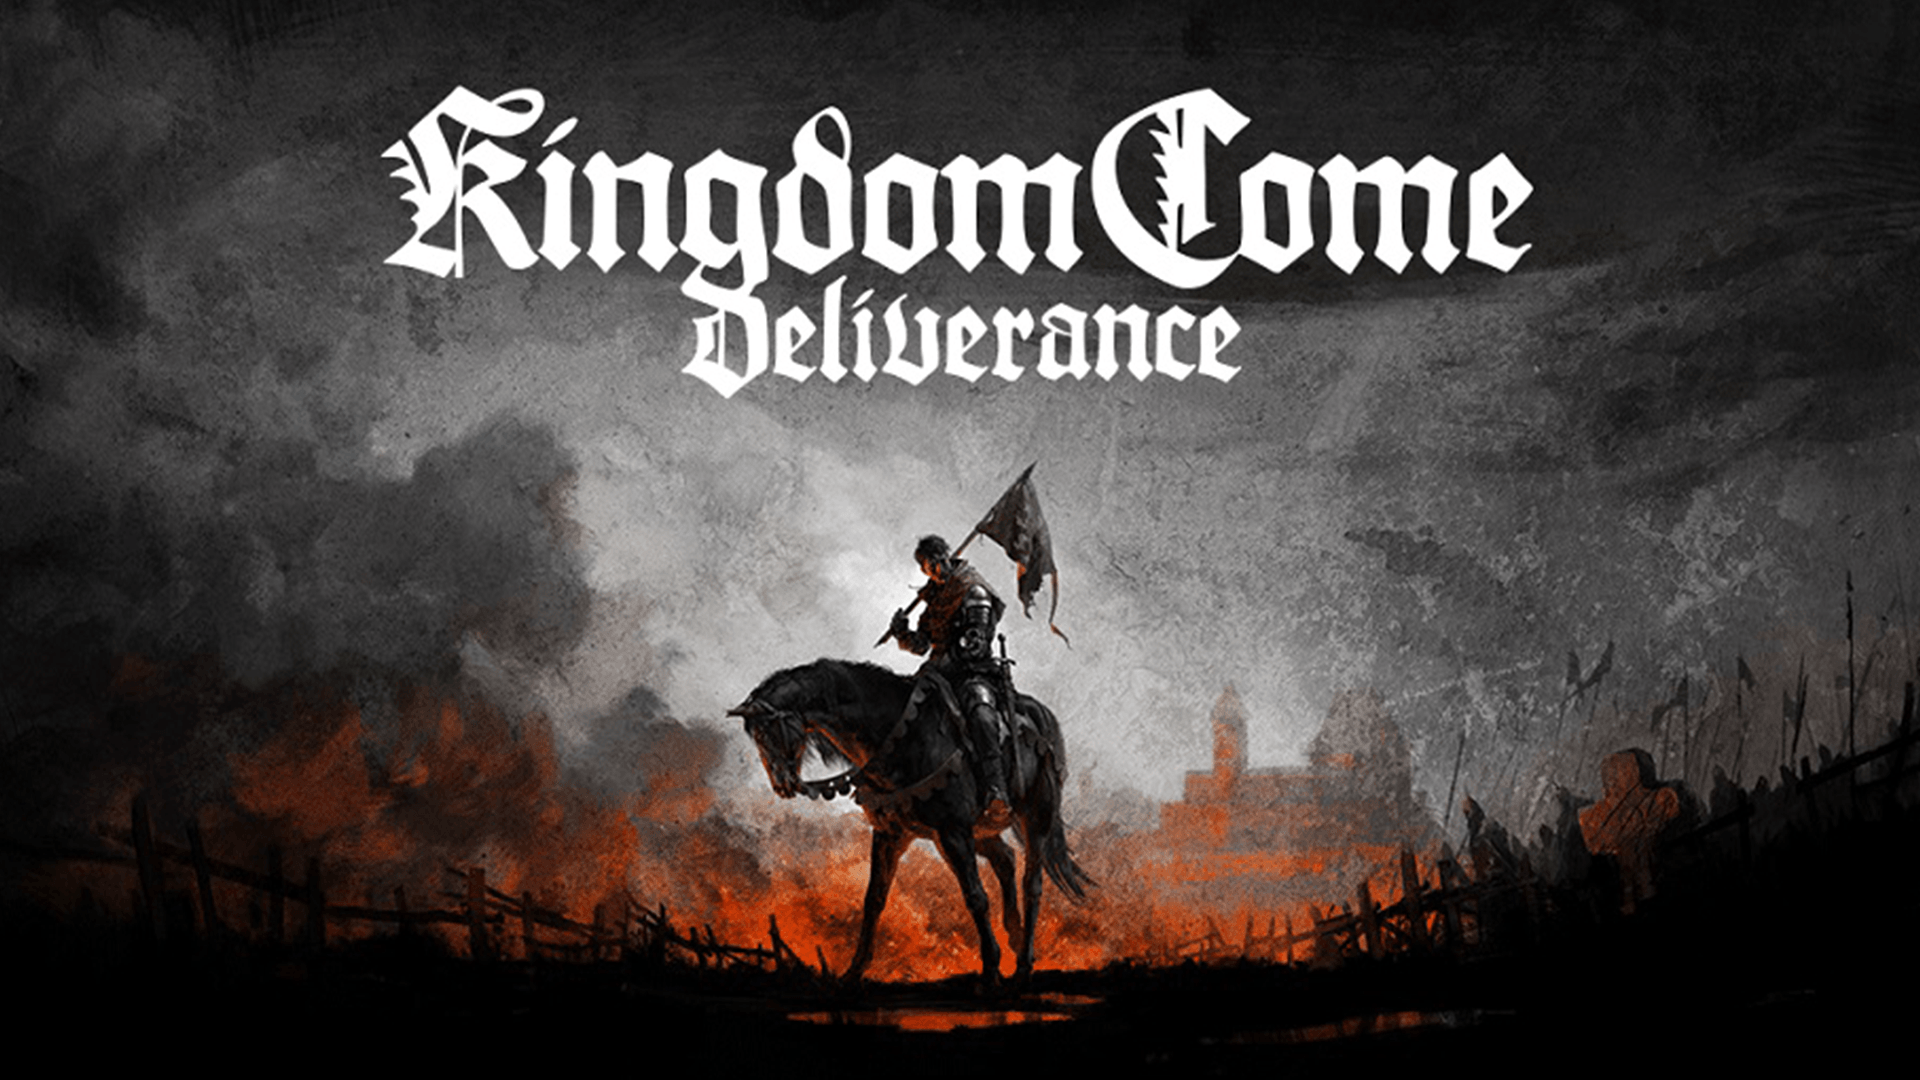 Kingdom Come Wallpaper with the Dark Art effect is amazing : r/kingdomcome